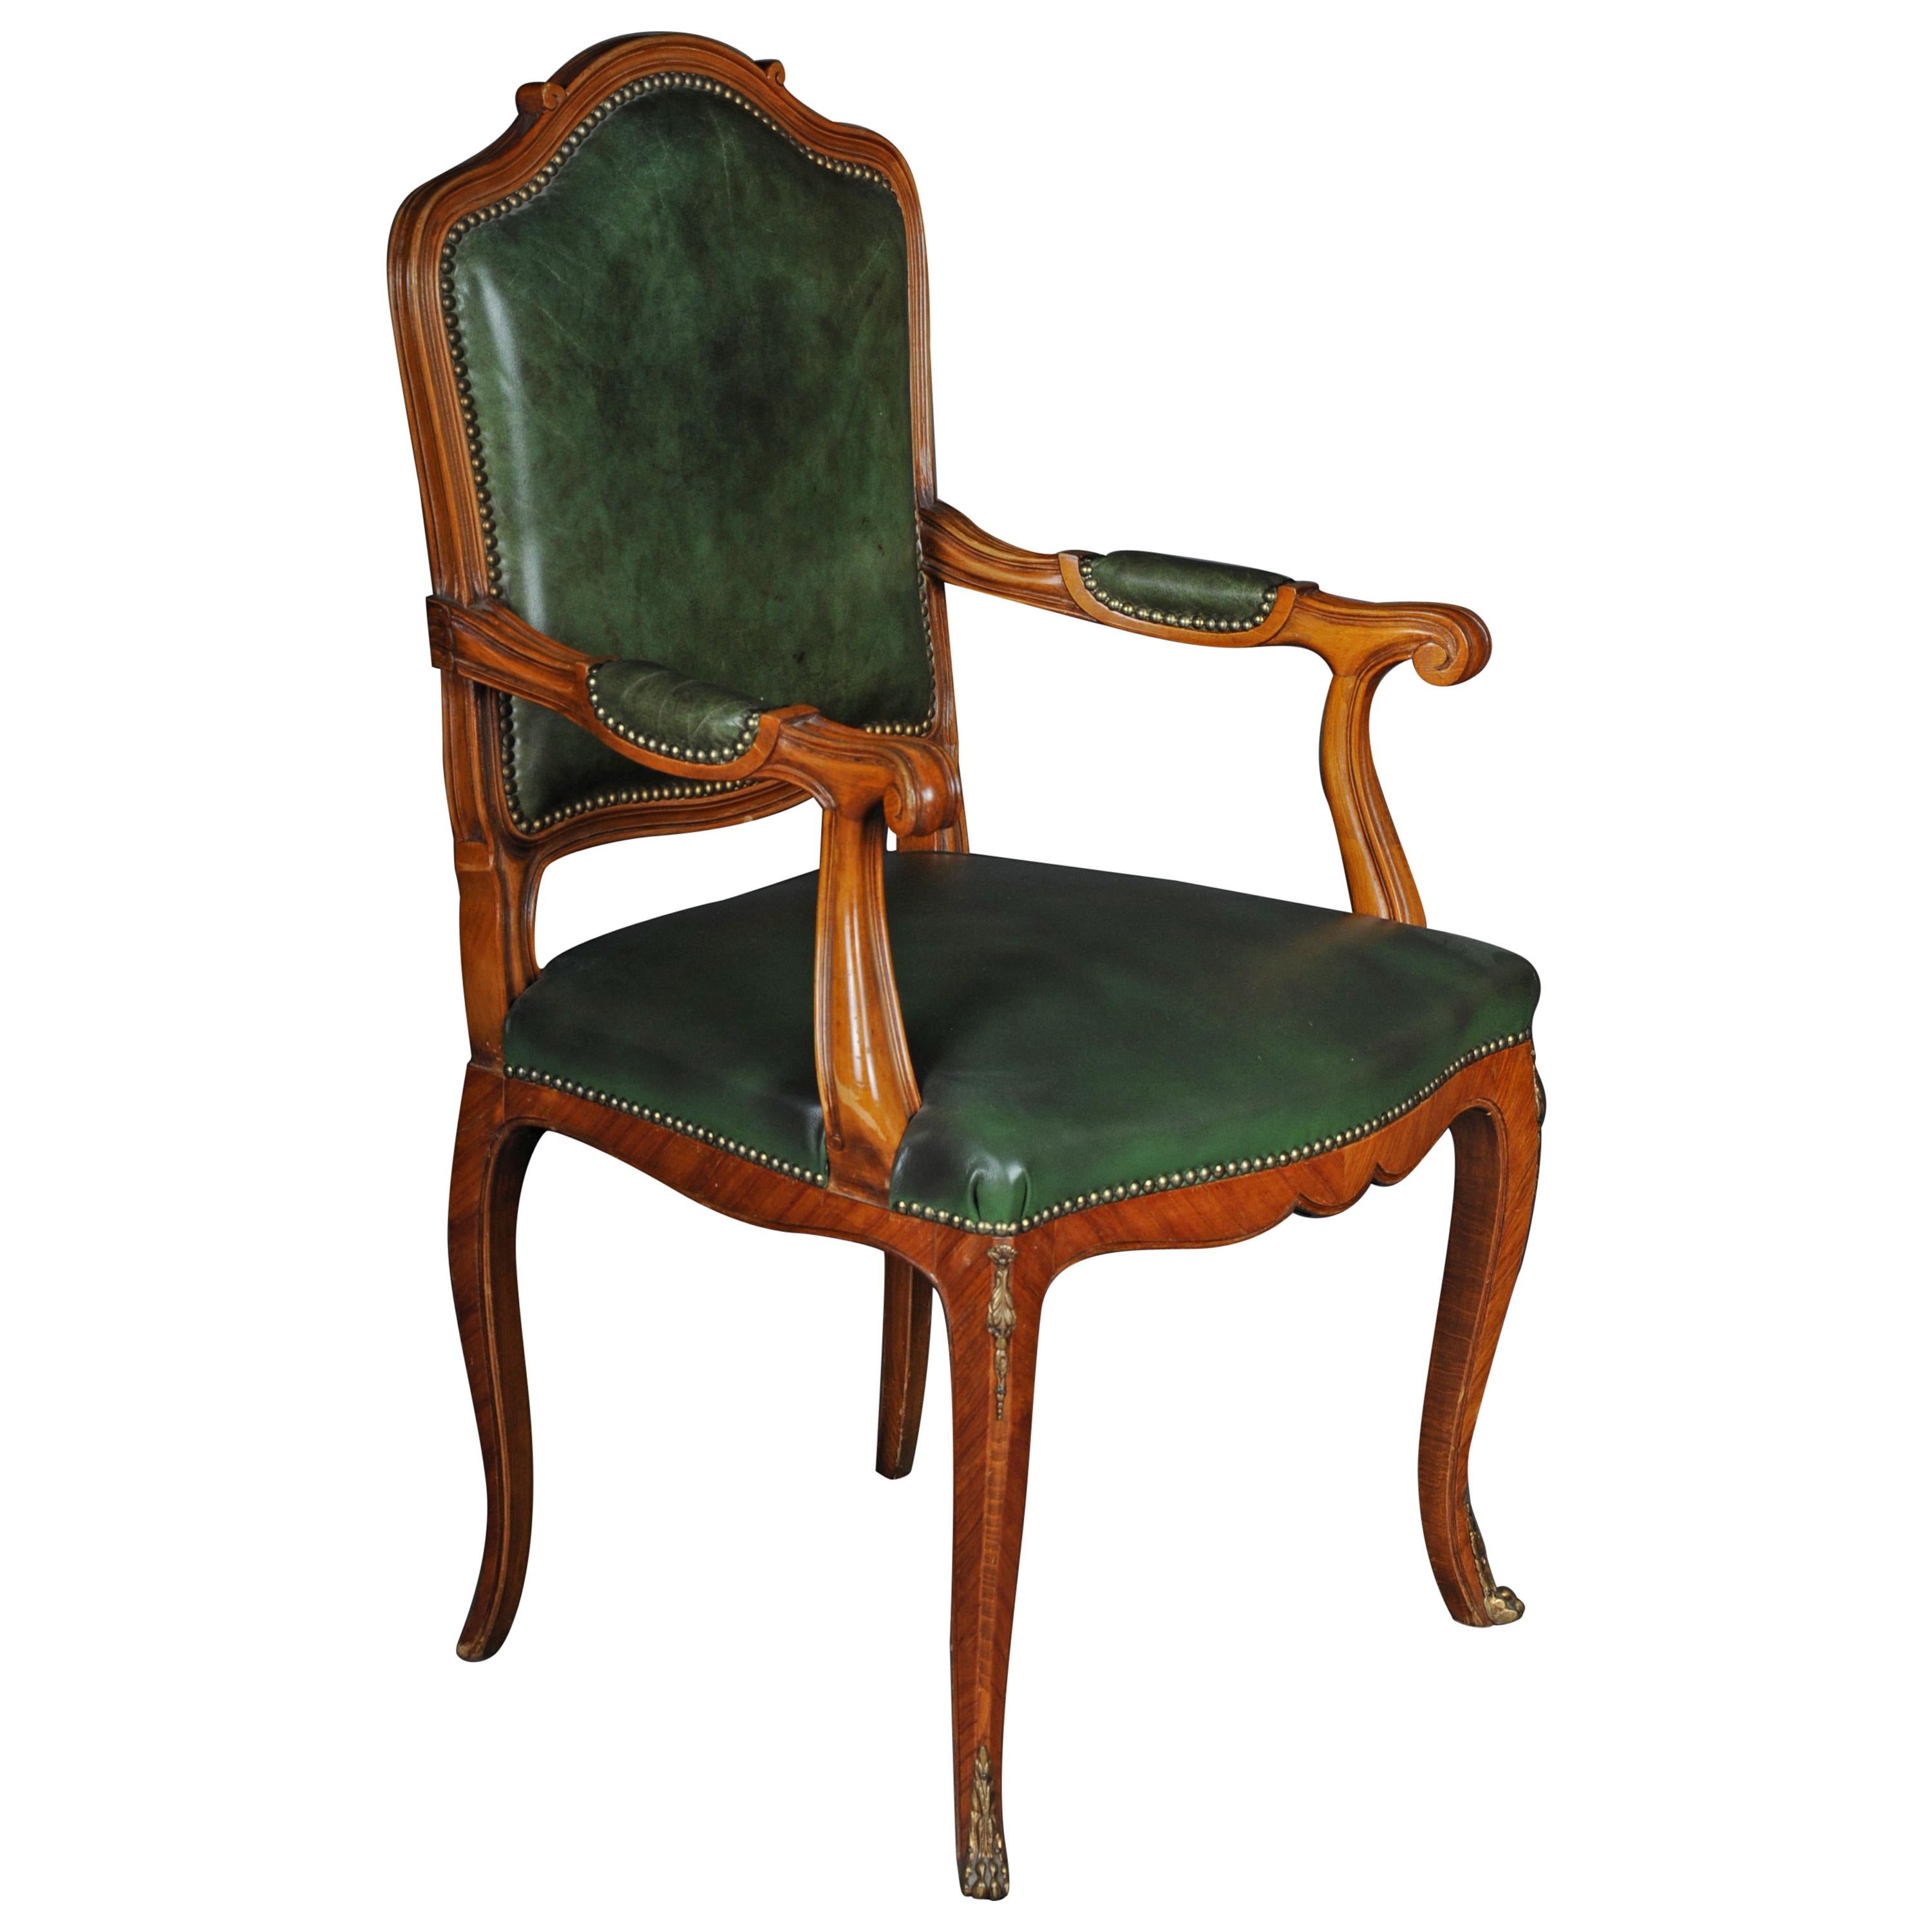 Beautiful Armchair in Rococo / Louis XV Style